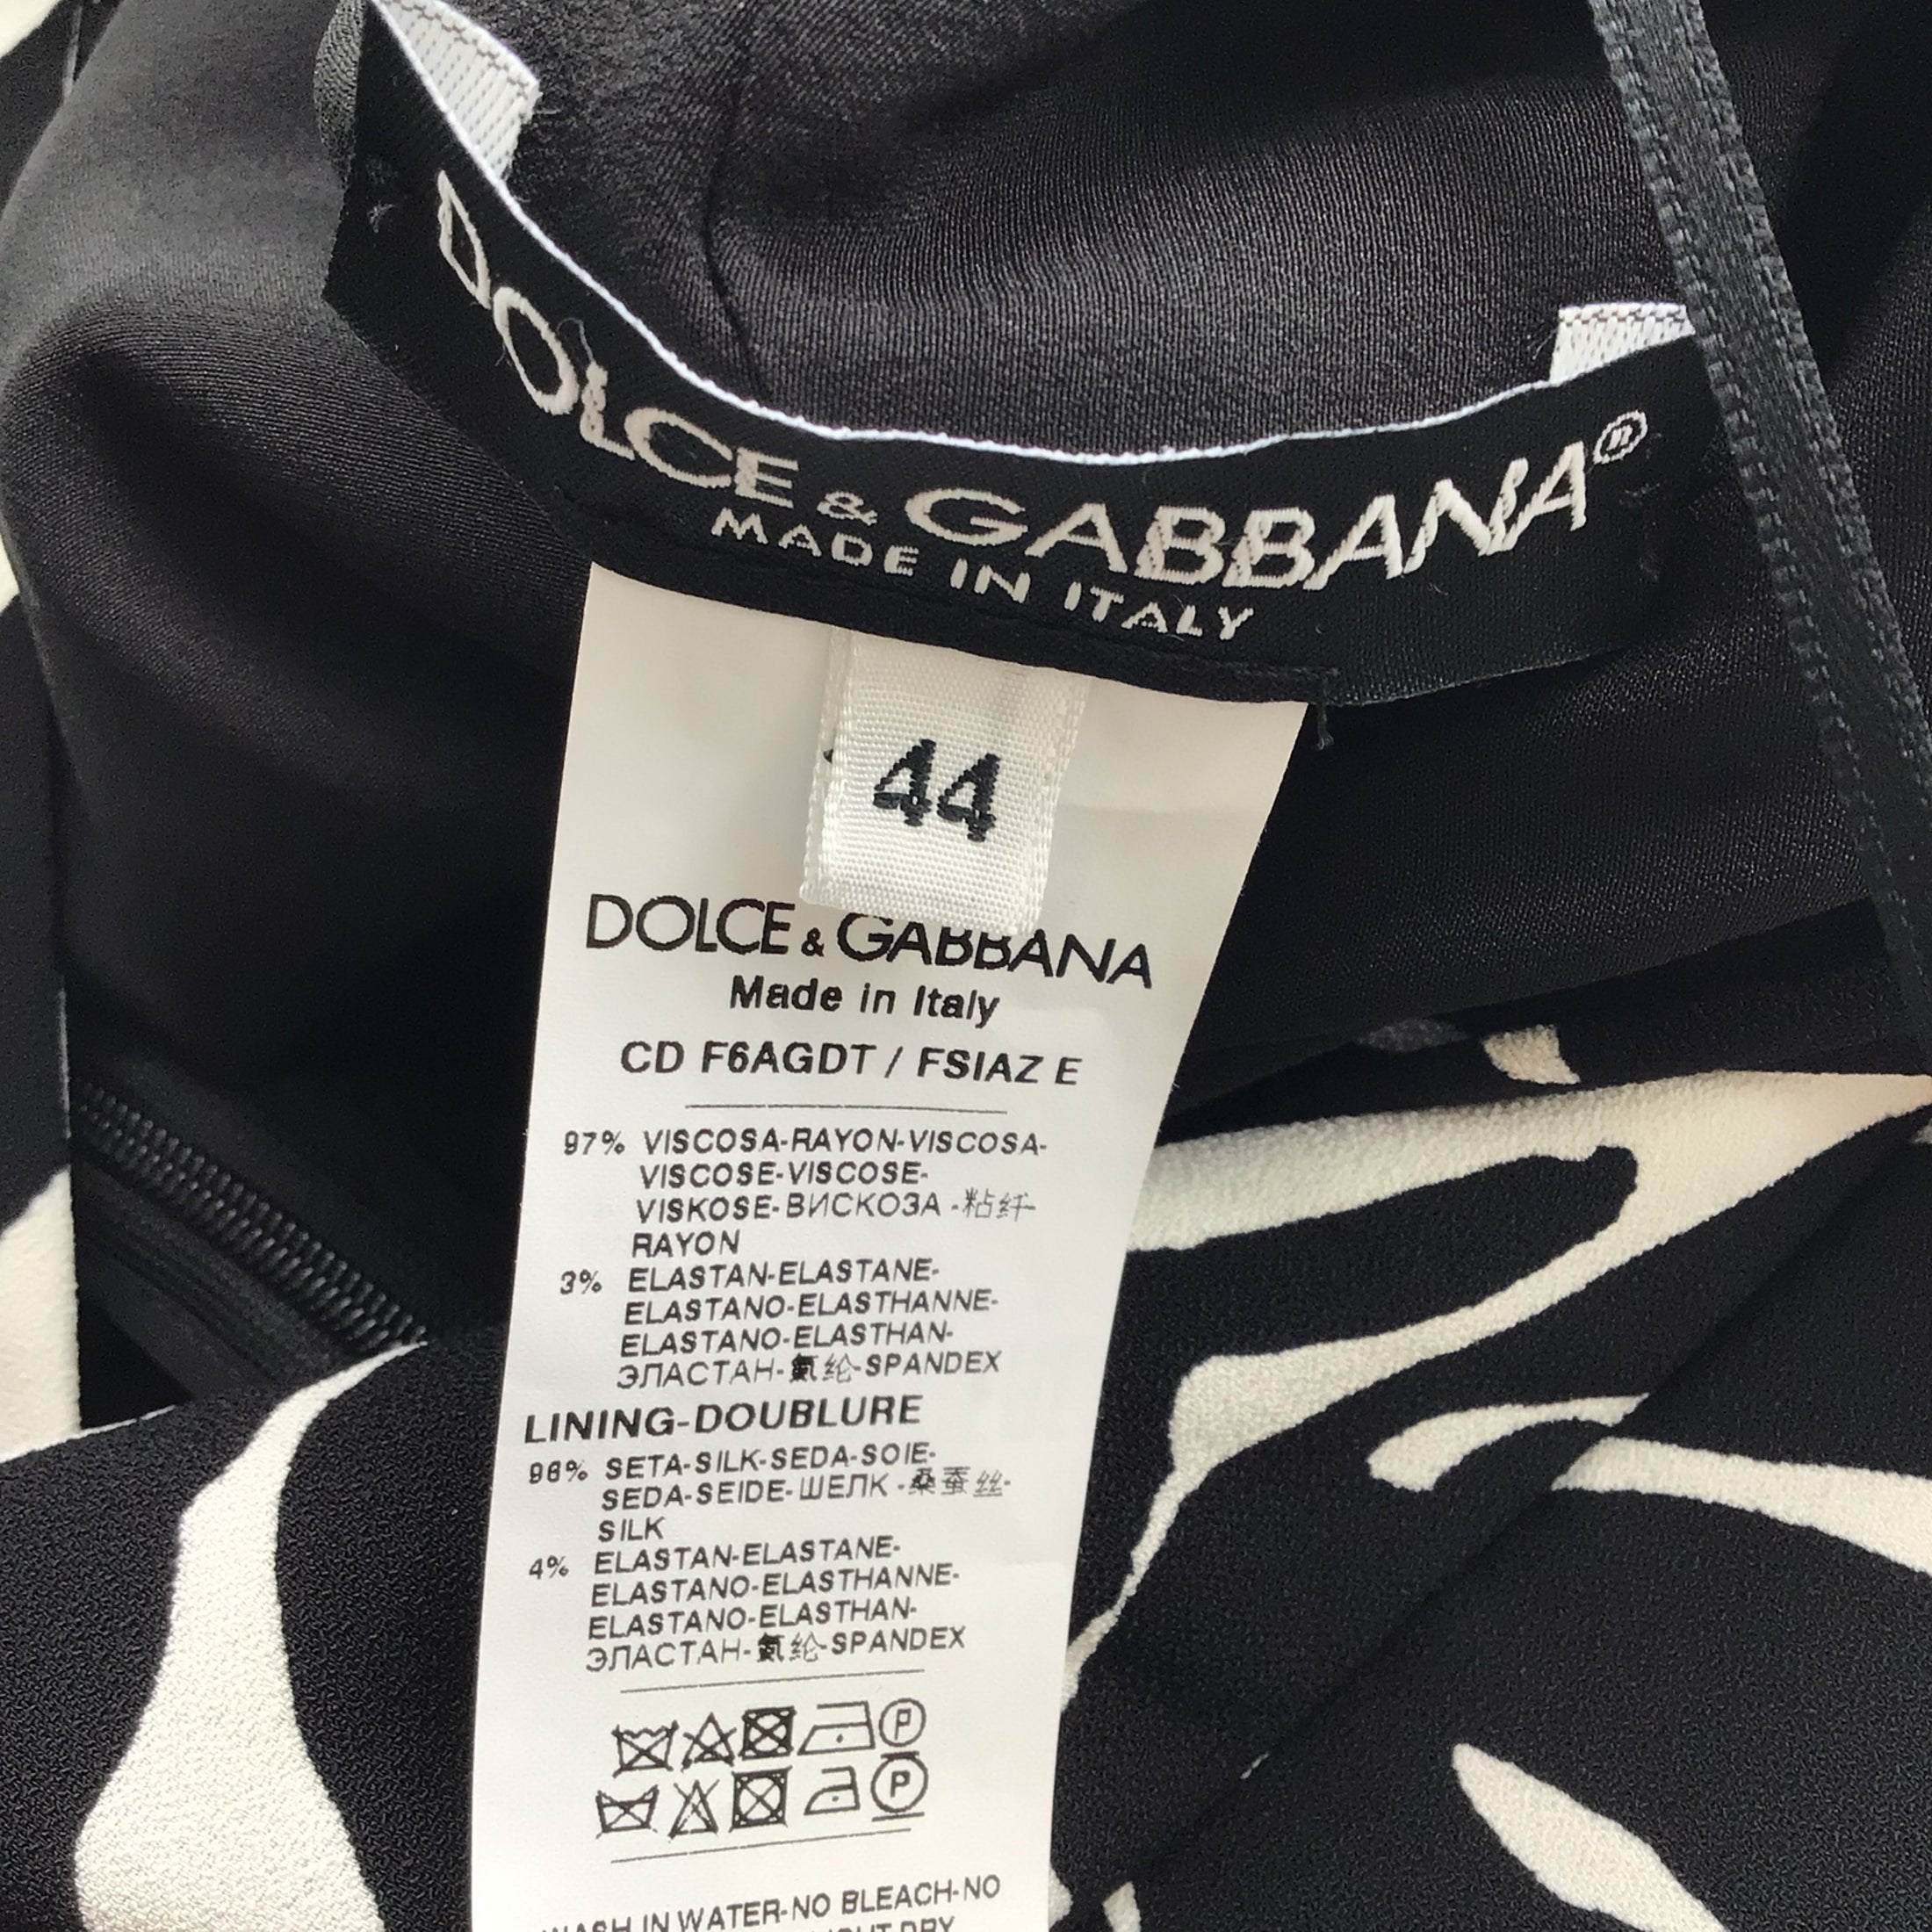 Dolce & Gabbana Black / White Zebra Printed Long Sleeved Crepe Dress